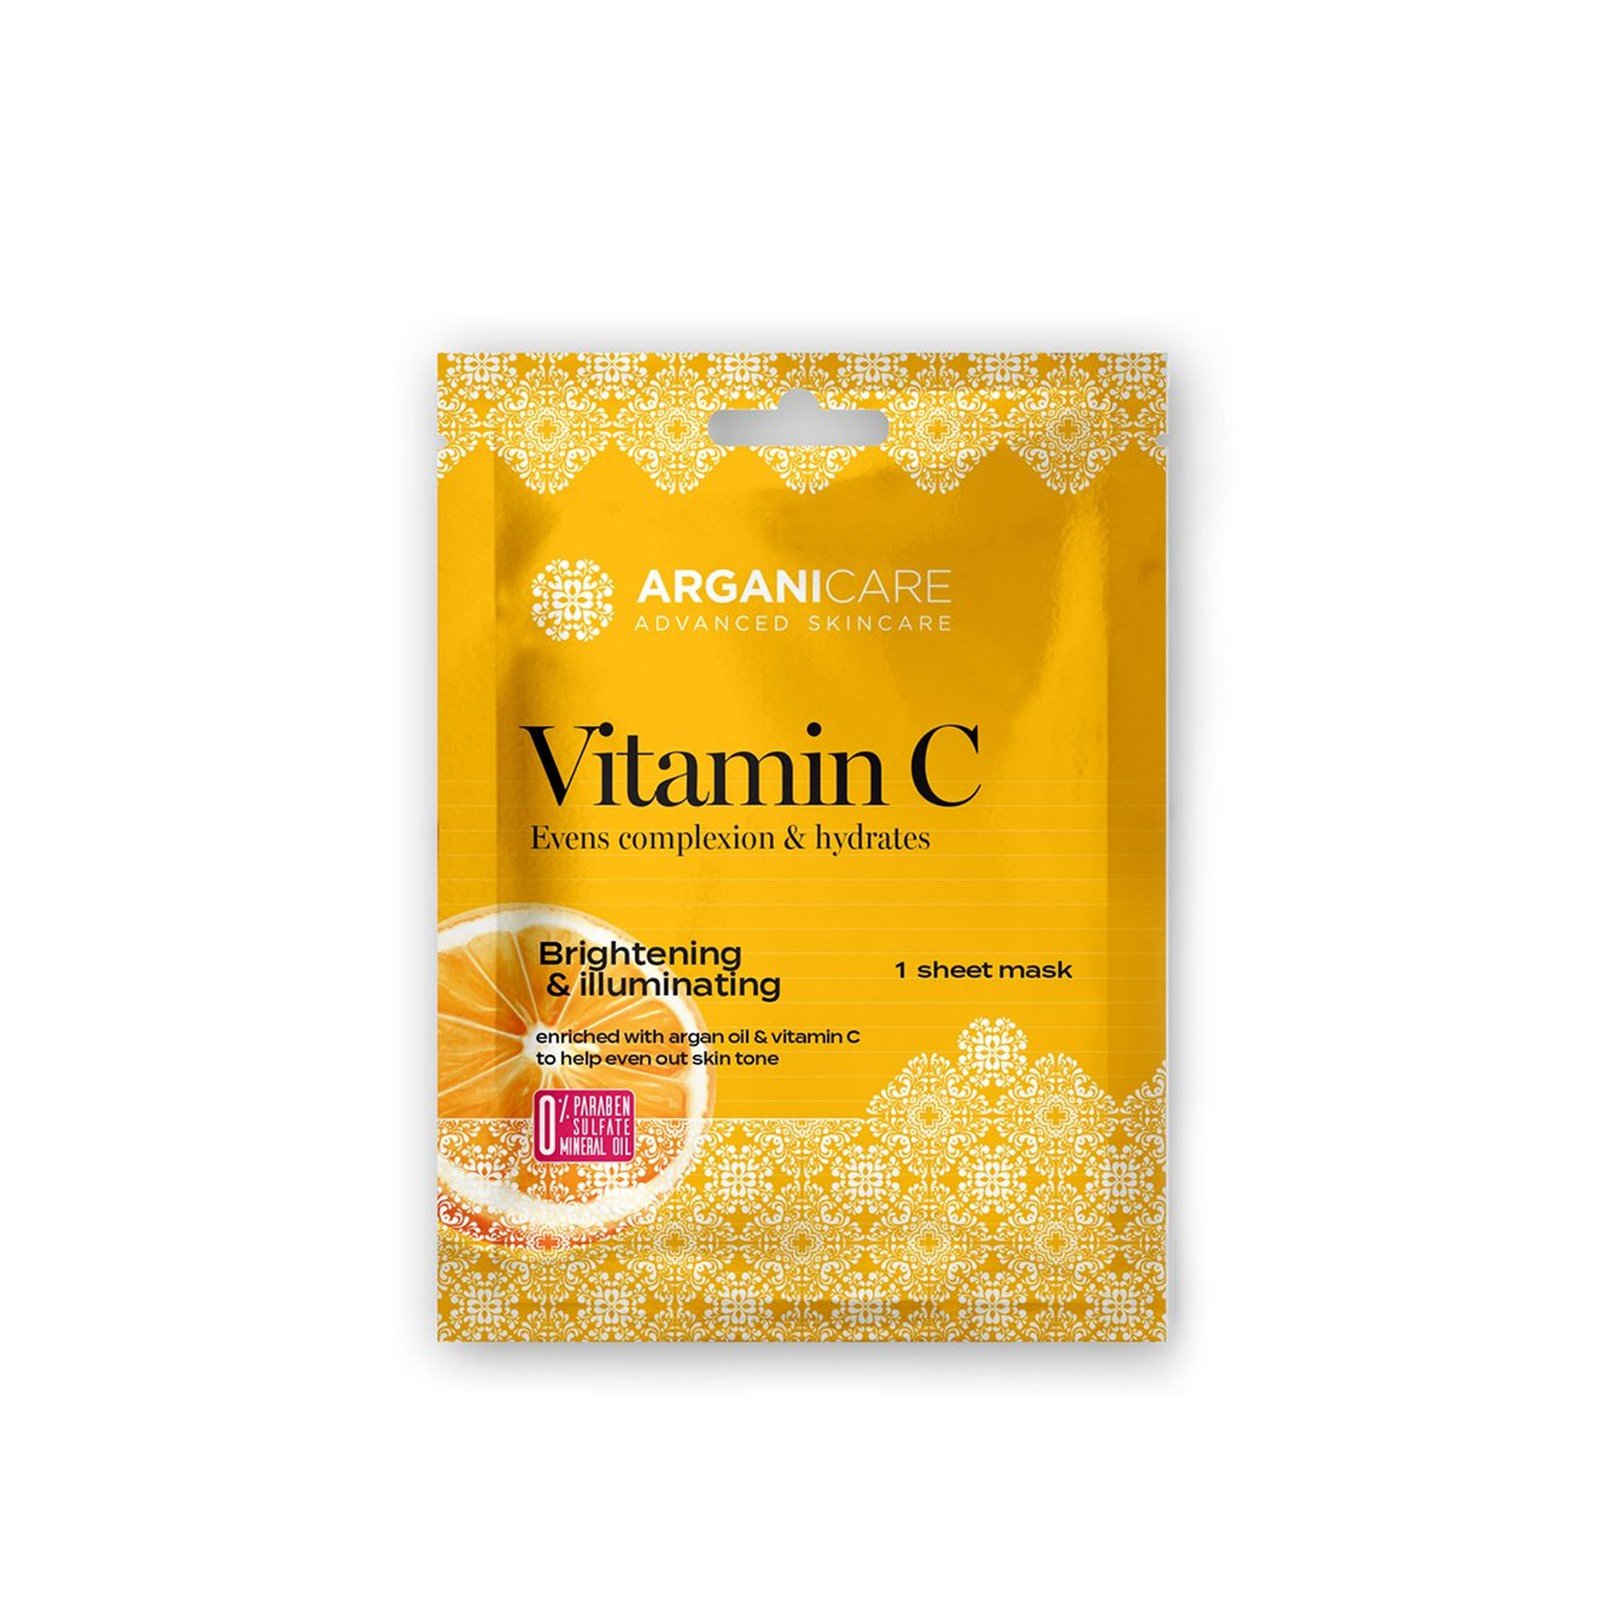 Arganicare Vitamin C Sheet Mask 17g (0.59 oz)